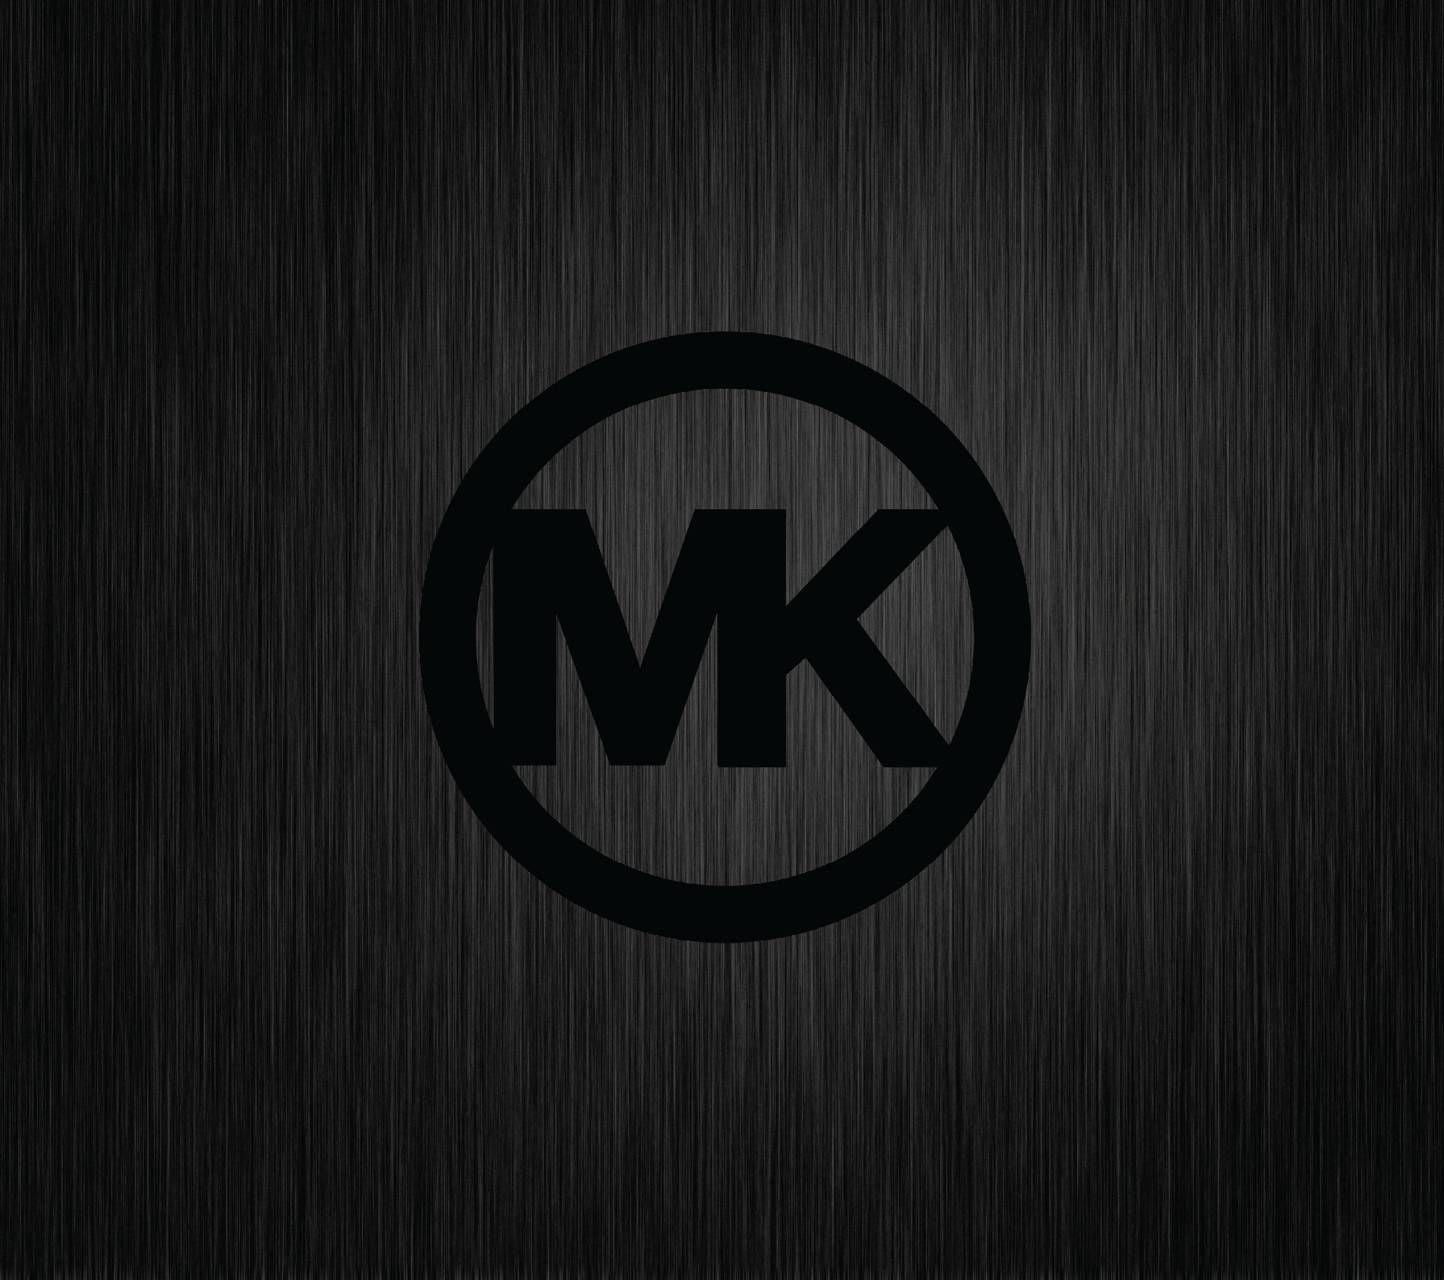 Micheal Kors Logo - Michael Kors Logo Wallpaper by jamesluce2 - 8b - Free on ZEDGE™